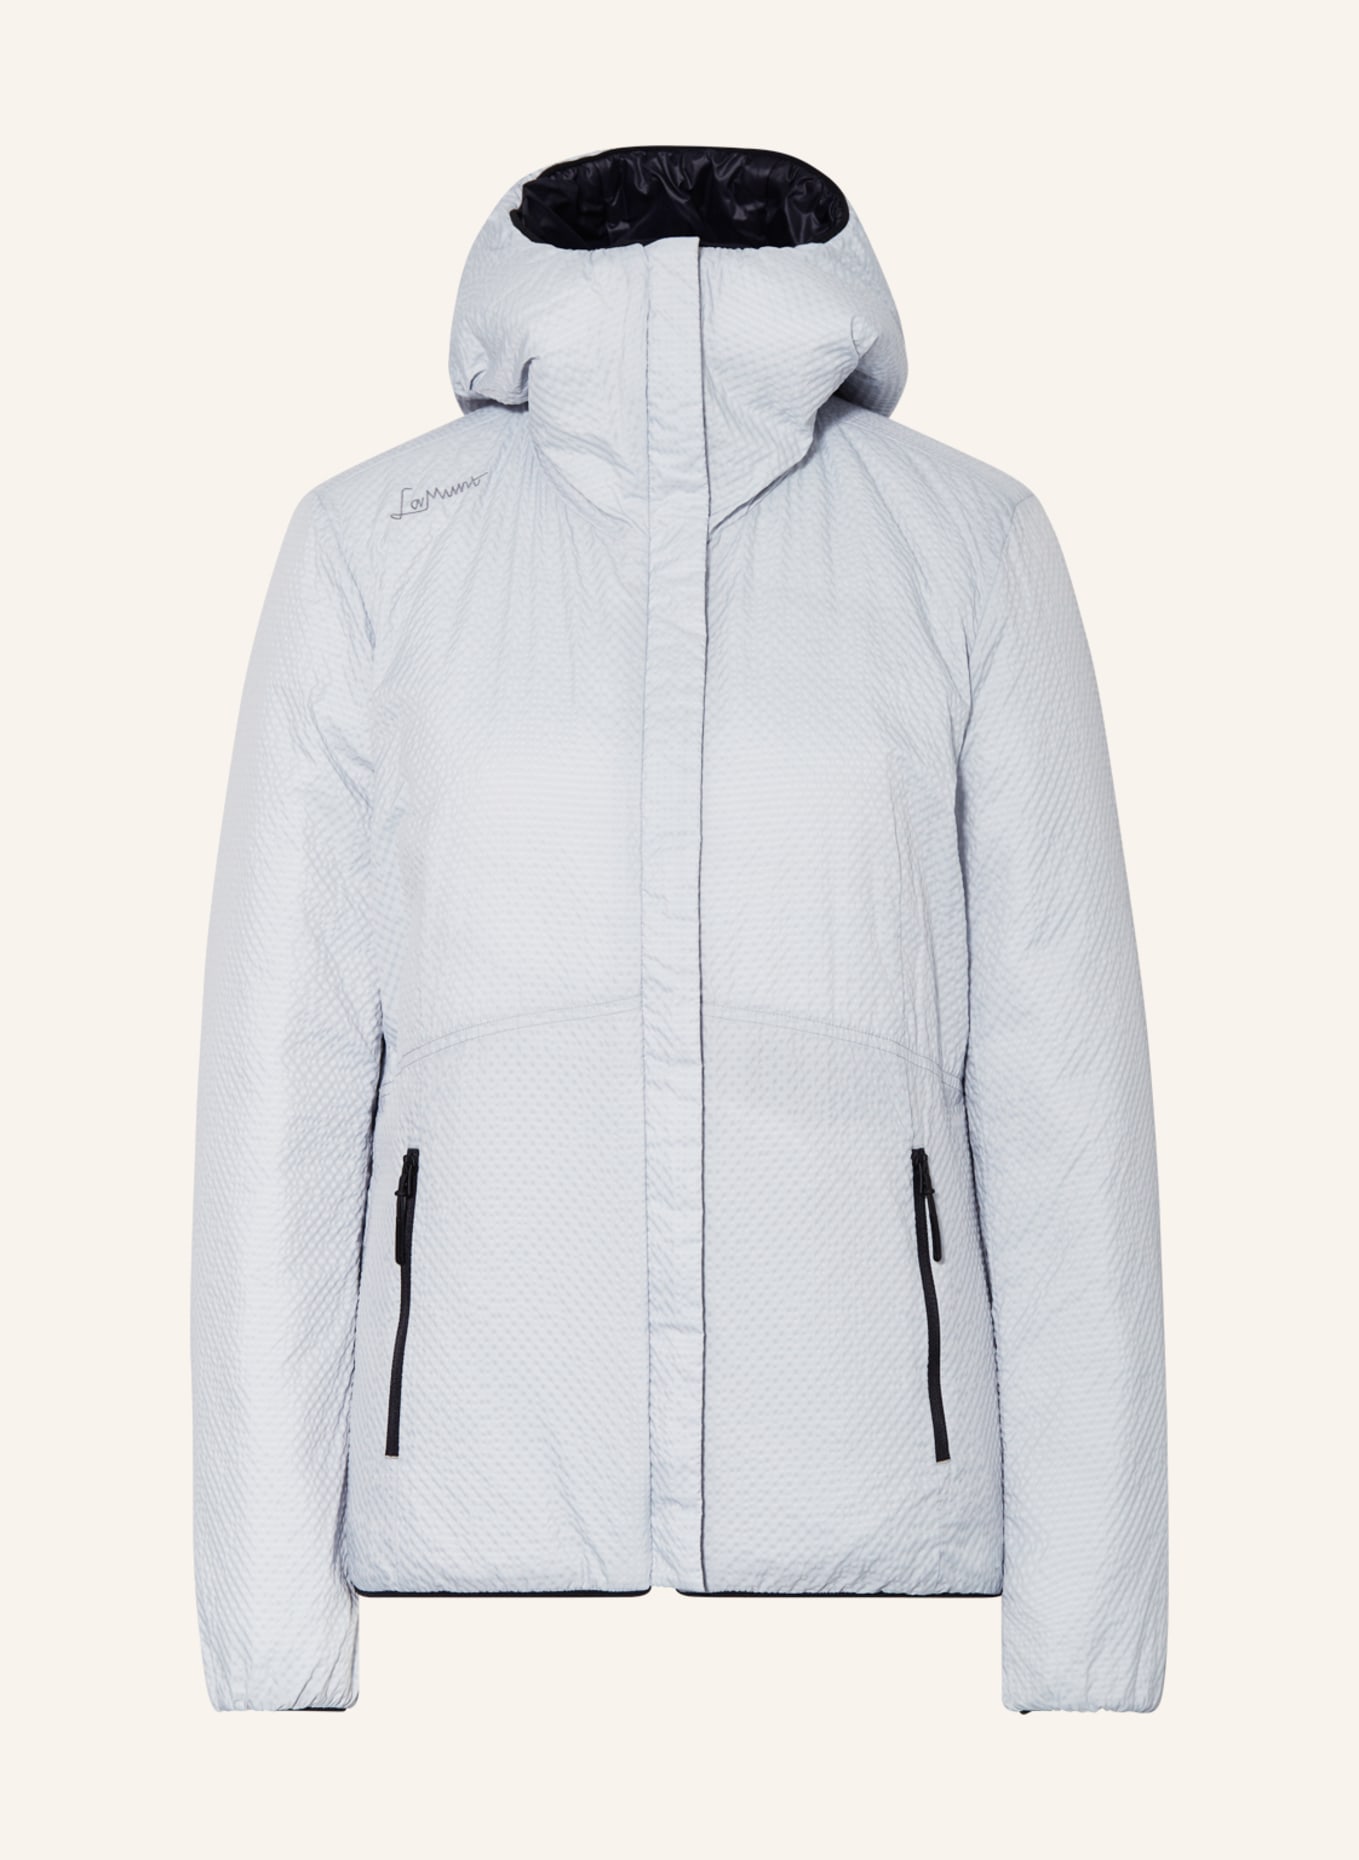 LaMunt Outdoor jacket IRMI reversible, Color: LIGHT GRAY (Image 1)